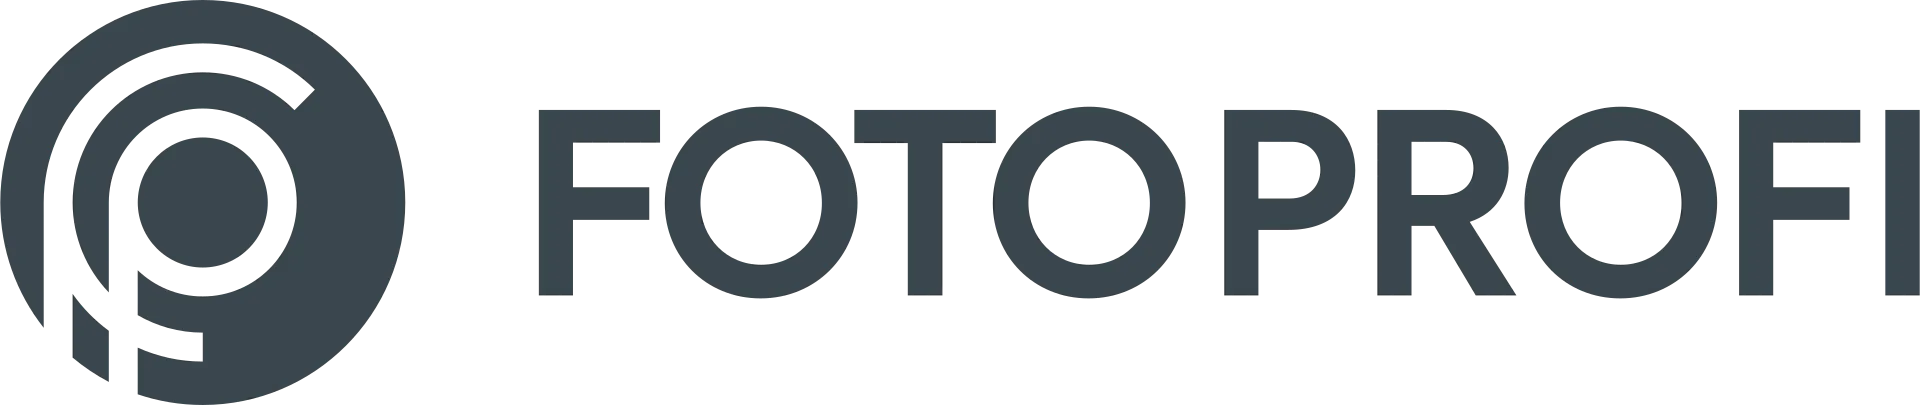 FOTOPROFI logo die aktuell Prospekt